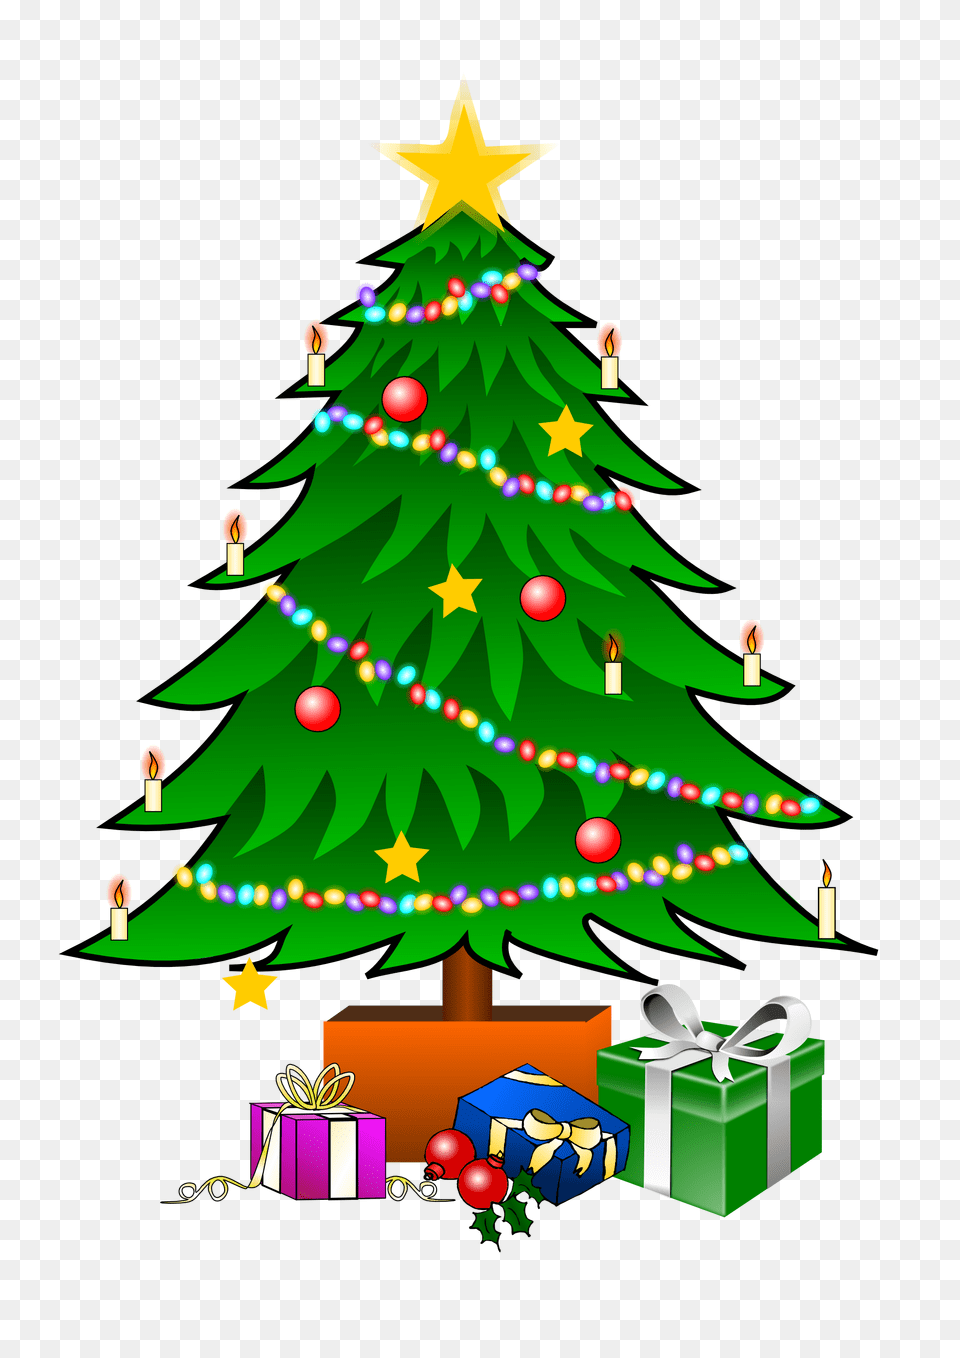 Christmas Tree Download, Plant, Christmas Decorations, Festival, Christmas Tree Png